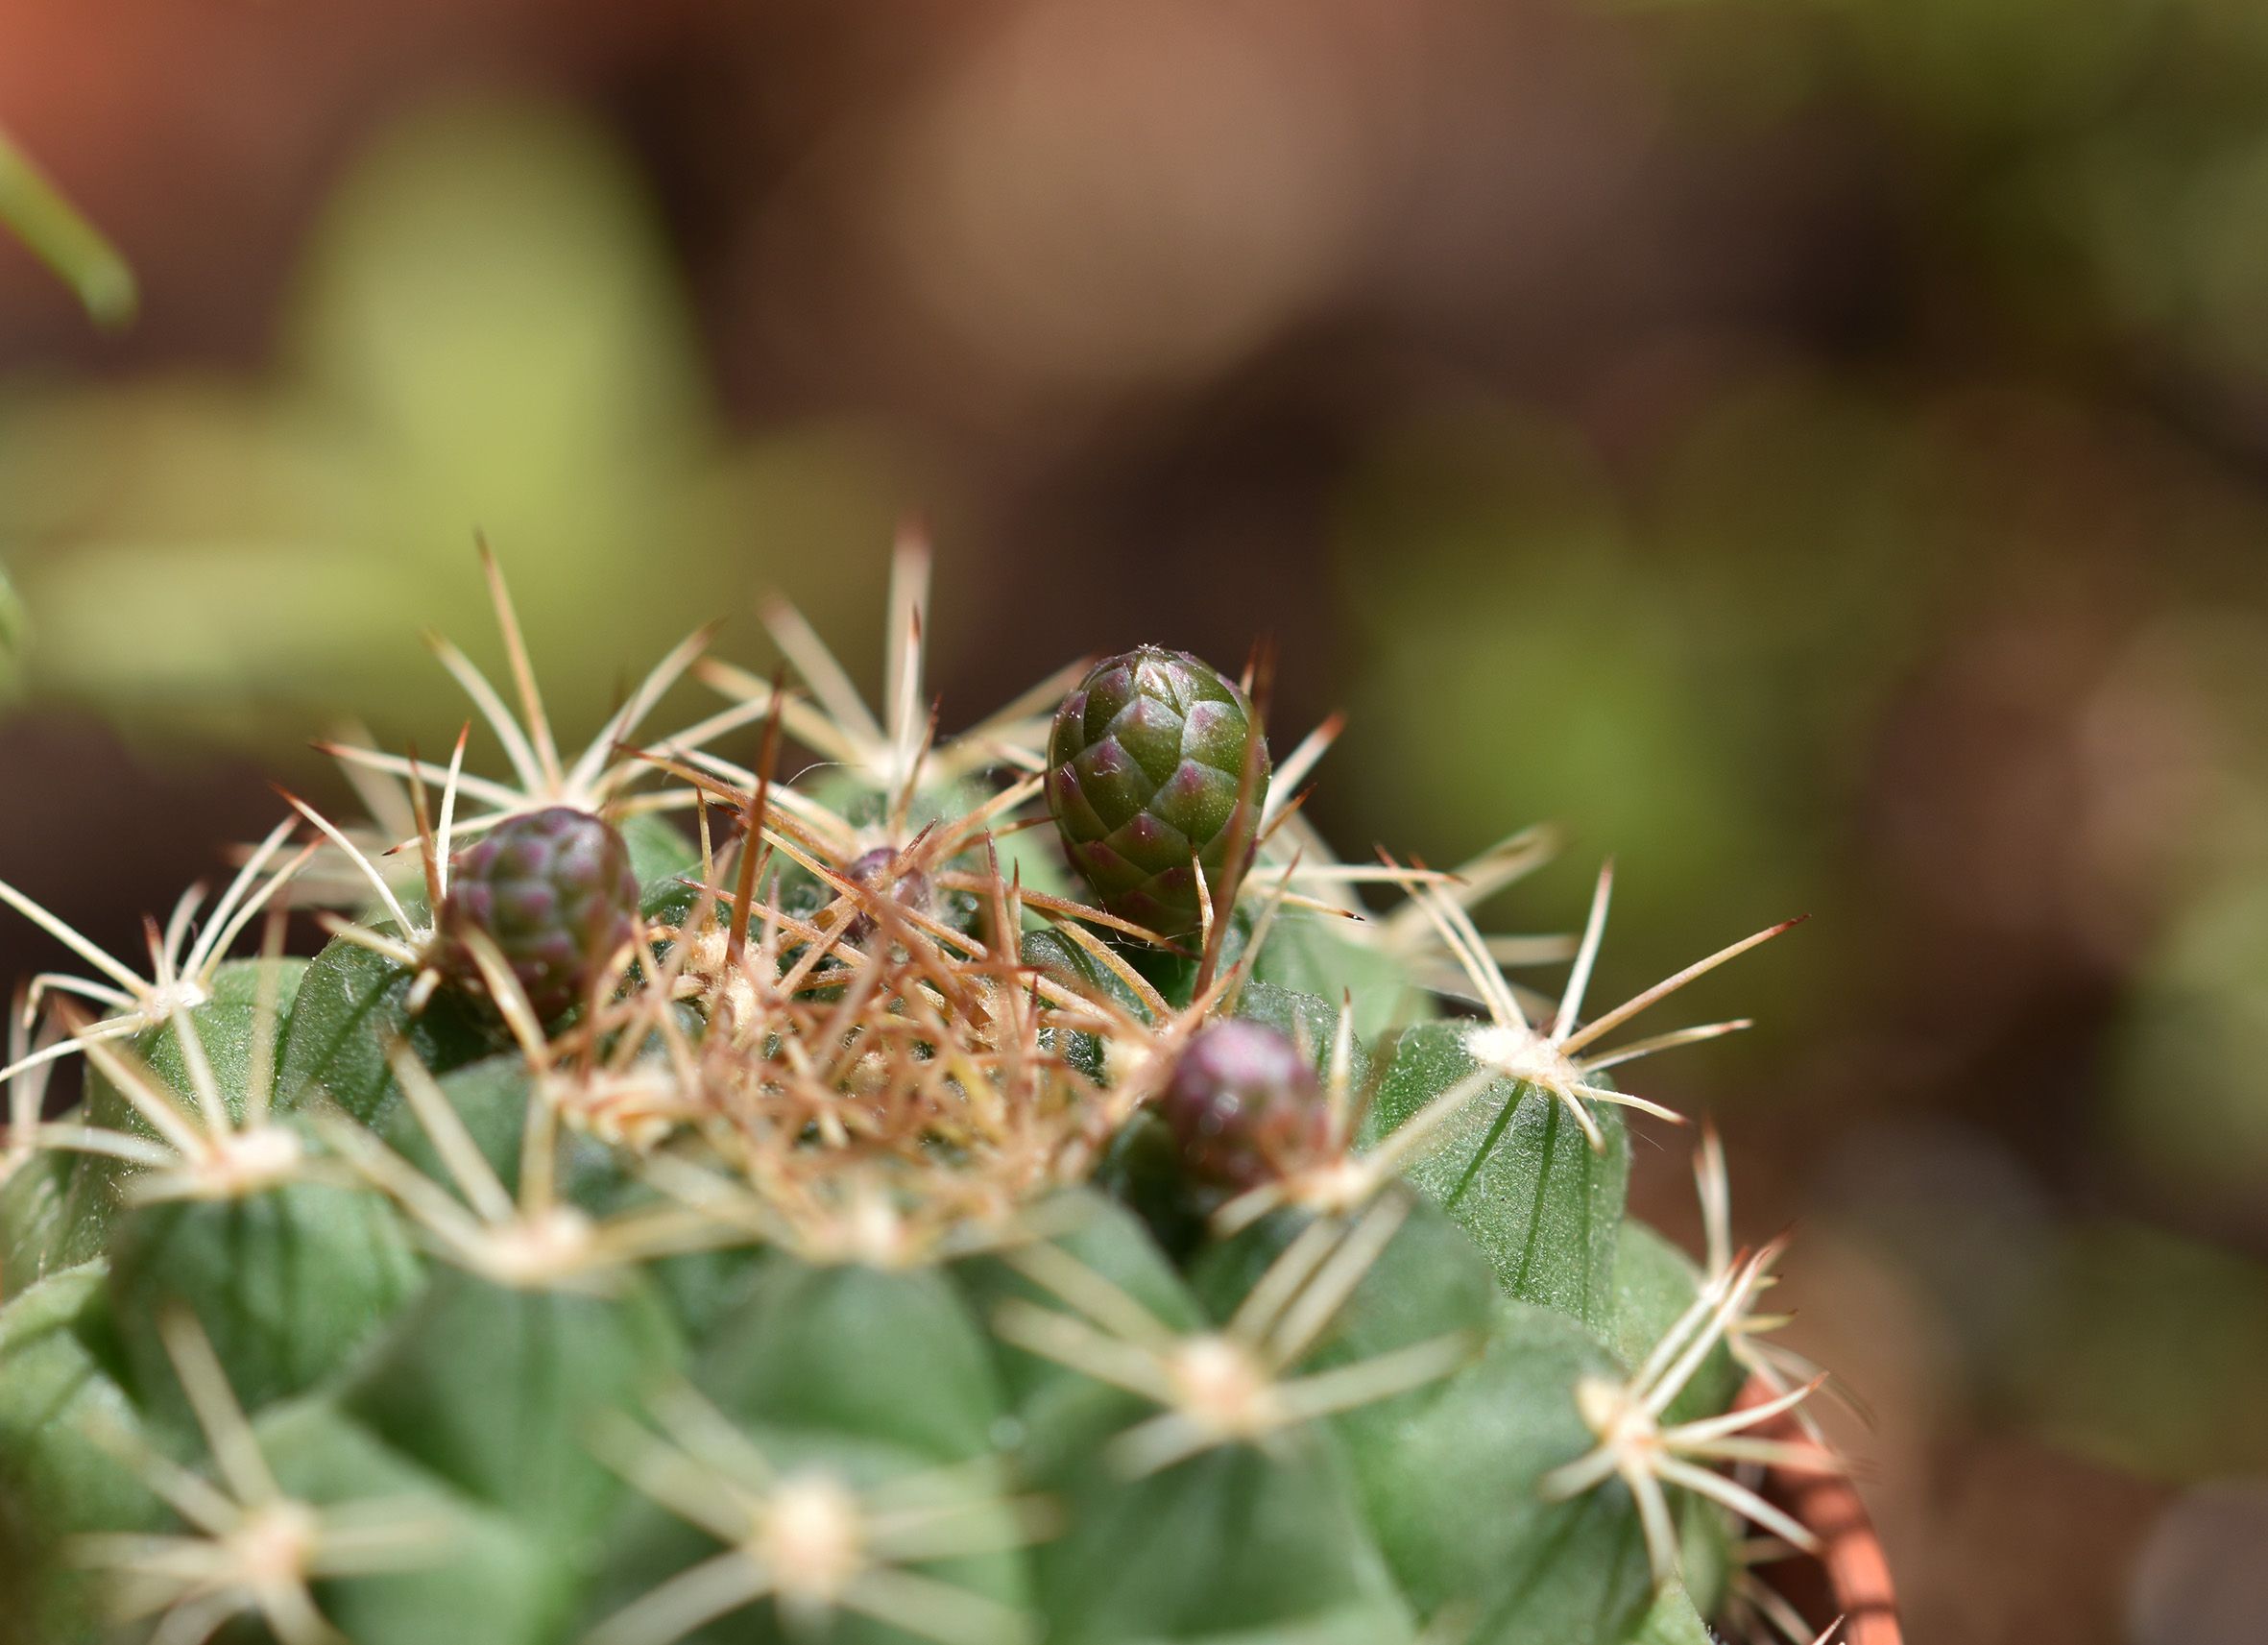 Gymnocalycium damsii cactus flower buds 1.jpg